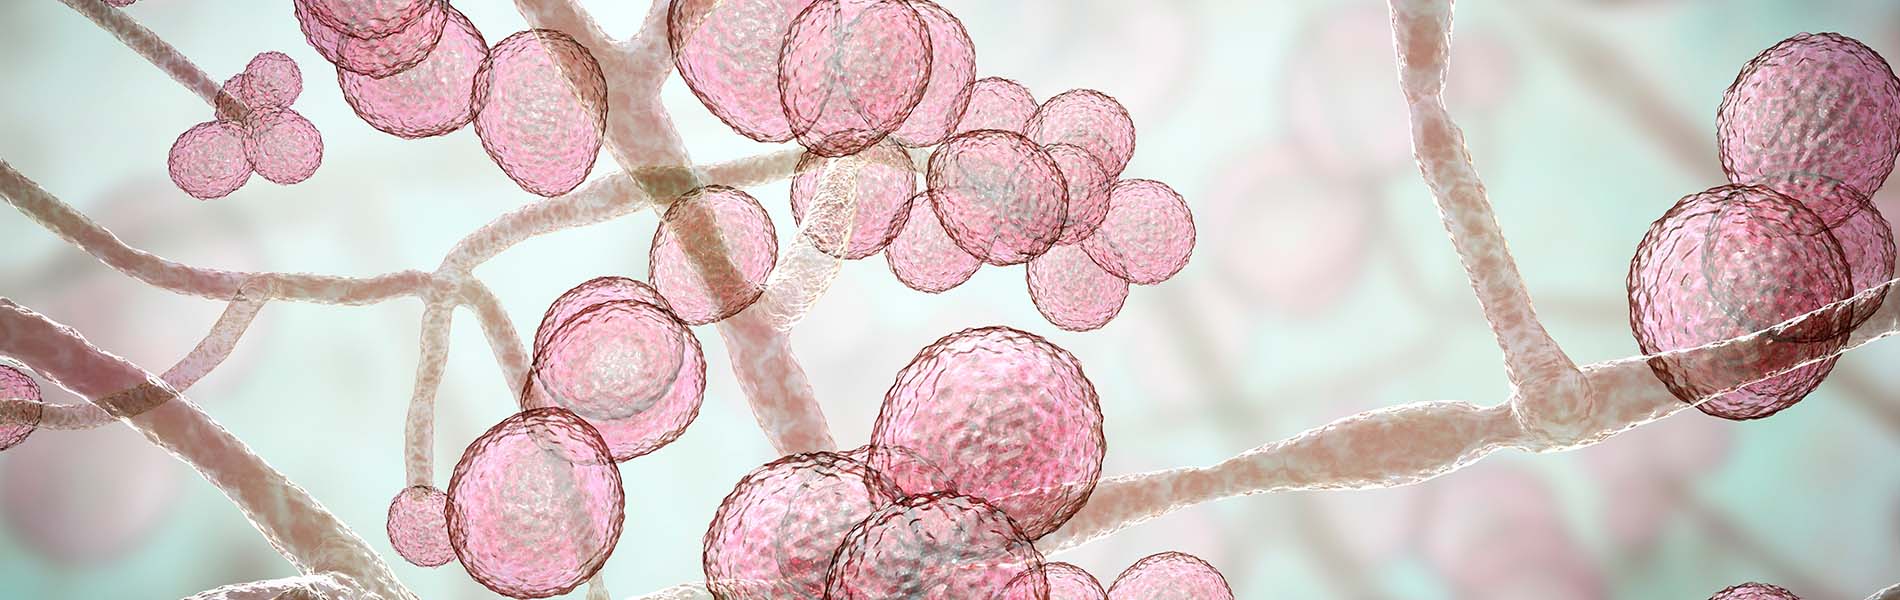 microscopic Candida auris